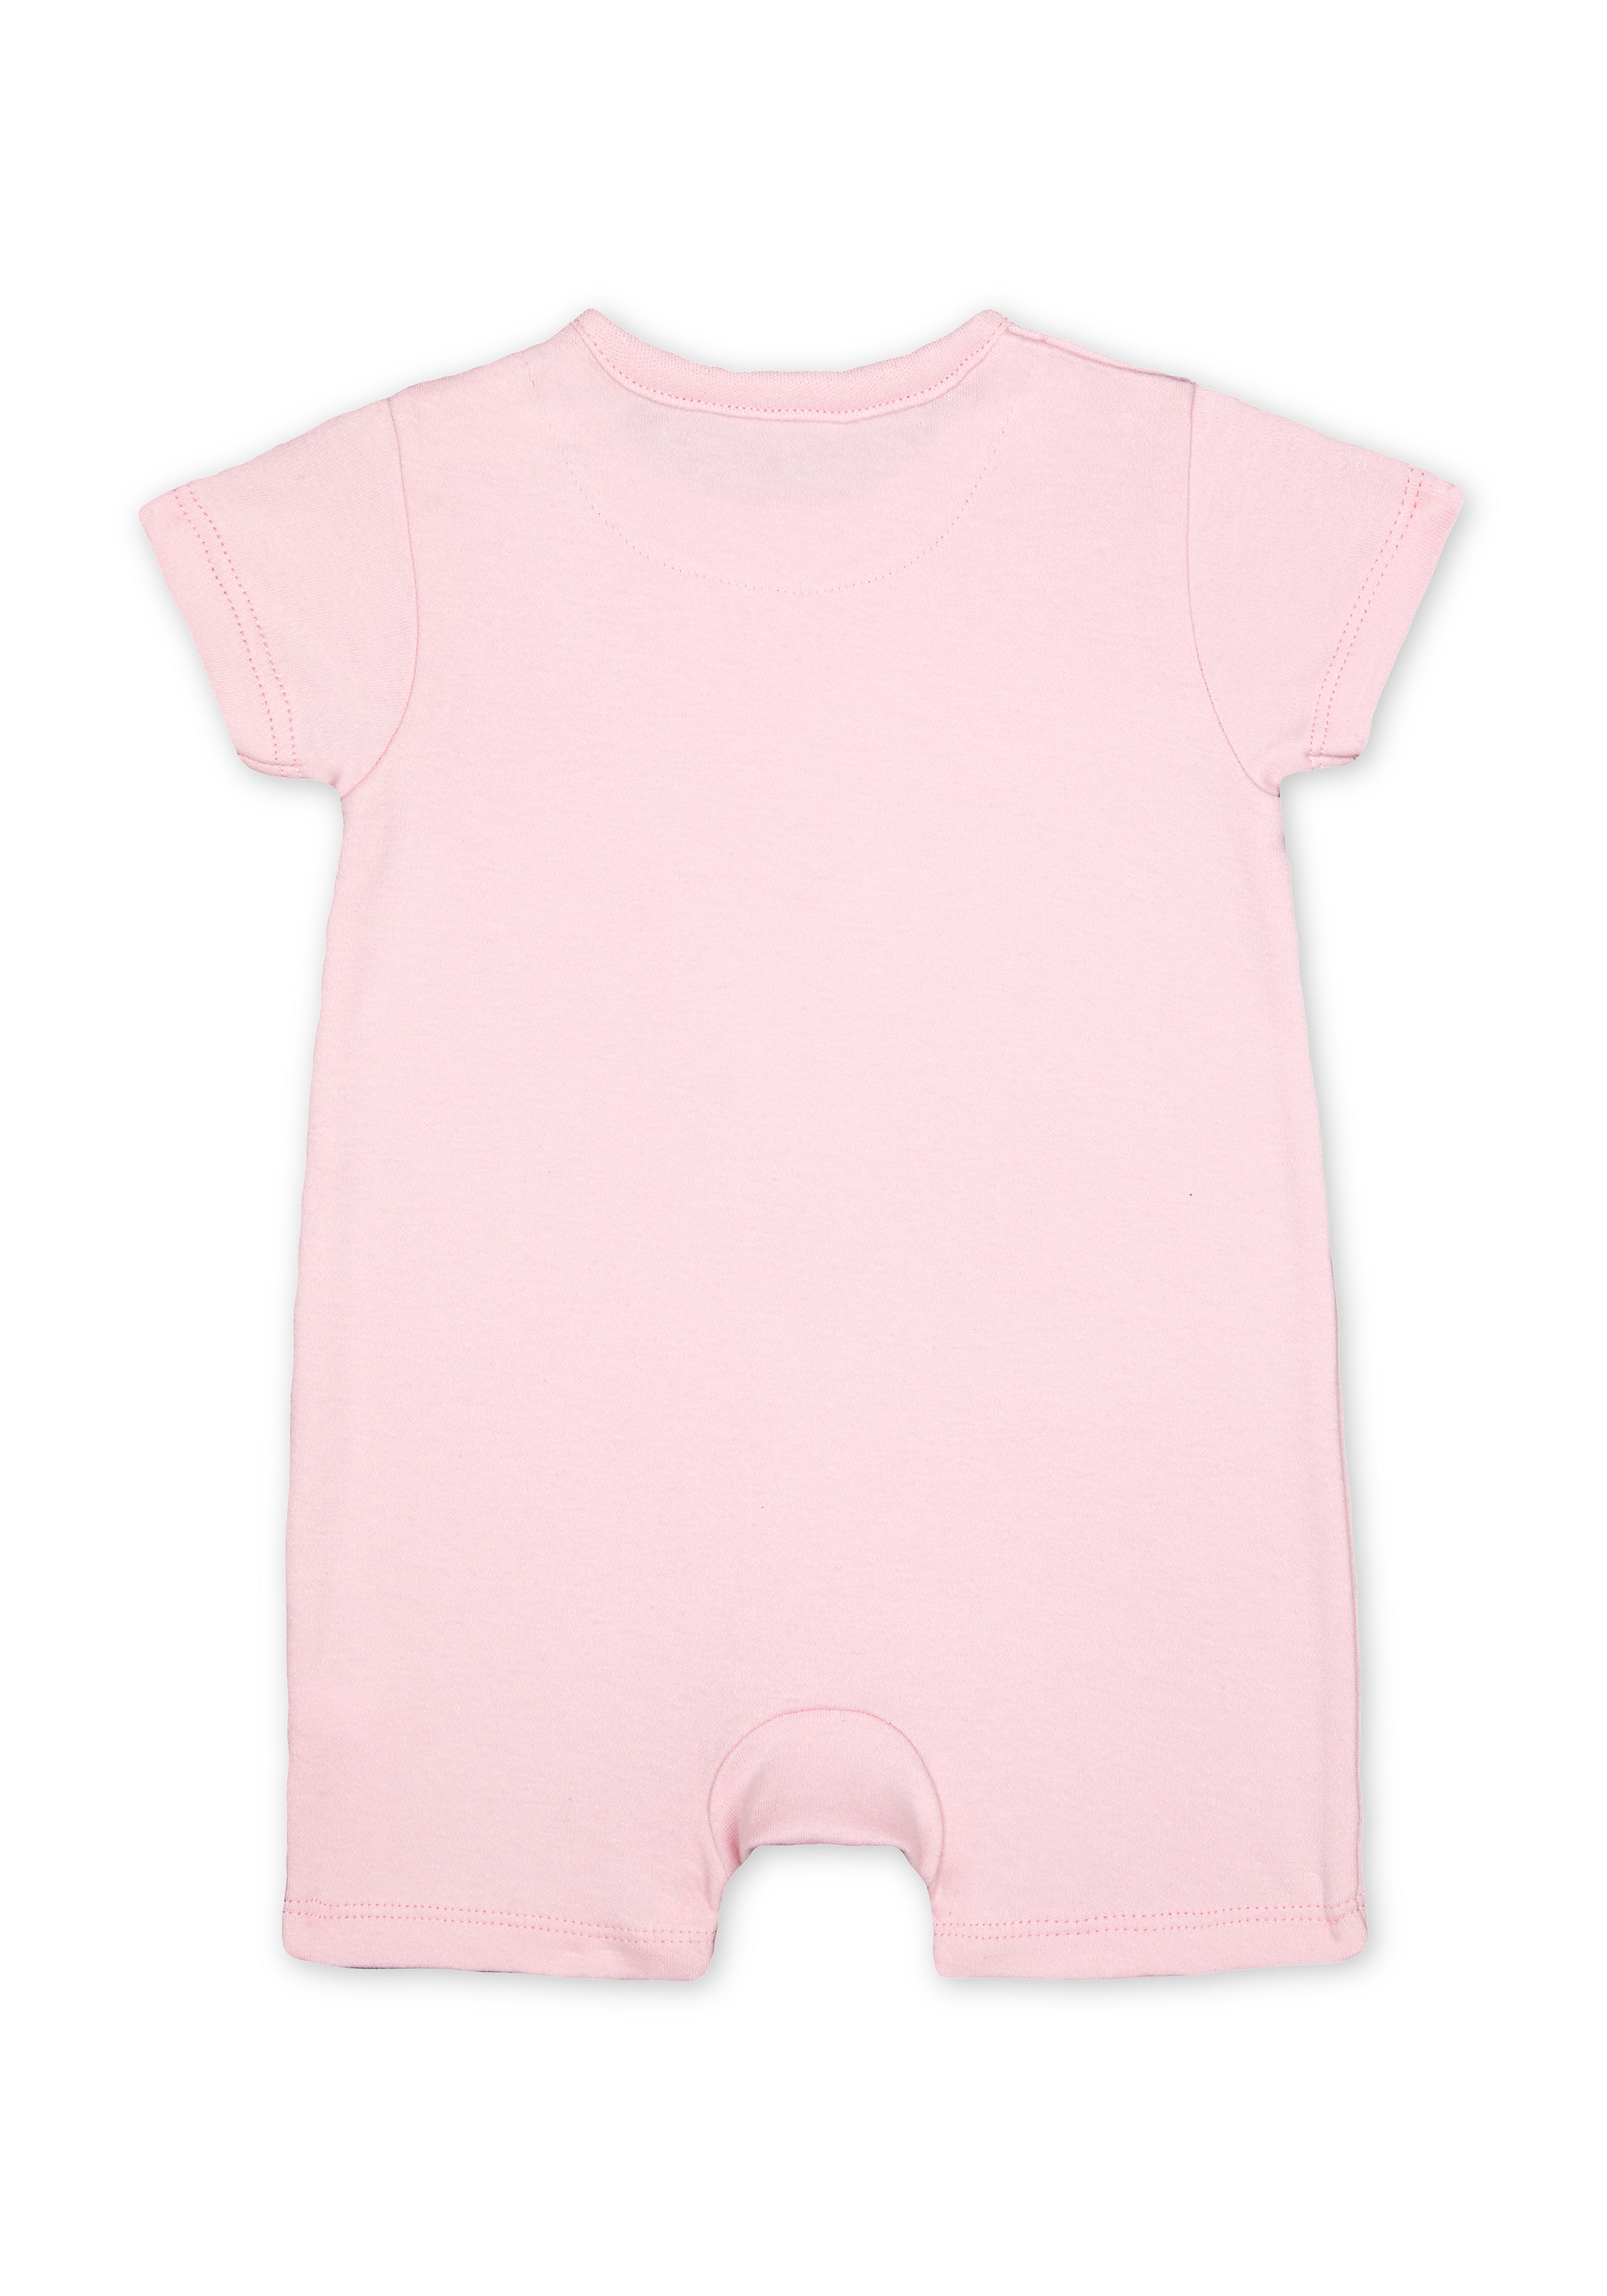 Mothercare | Girls Half Sleeves Romper Heart Print - Pink 1